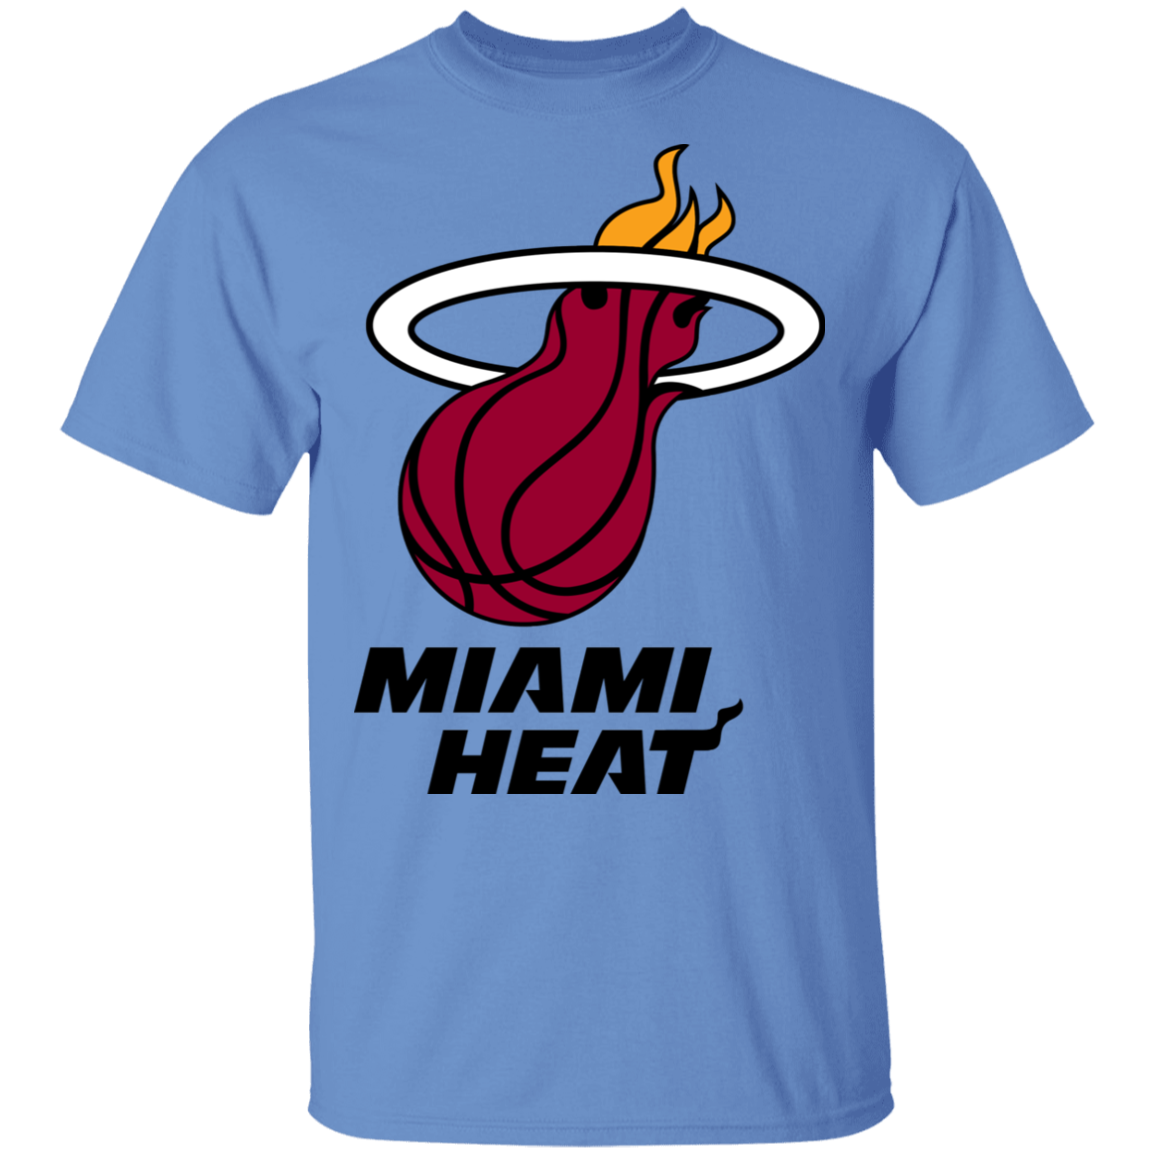 Miami Heat Mascot t-shirt by To-Tee Clothing - Issuu